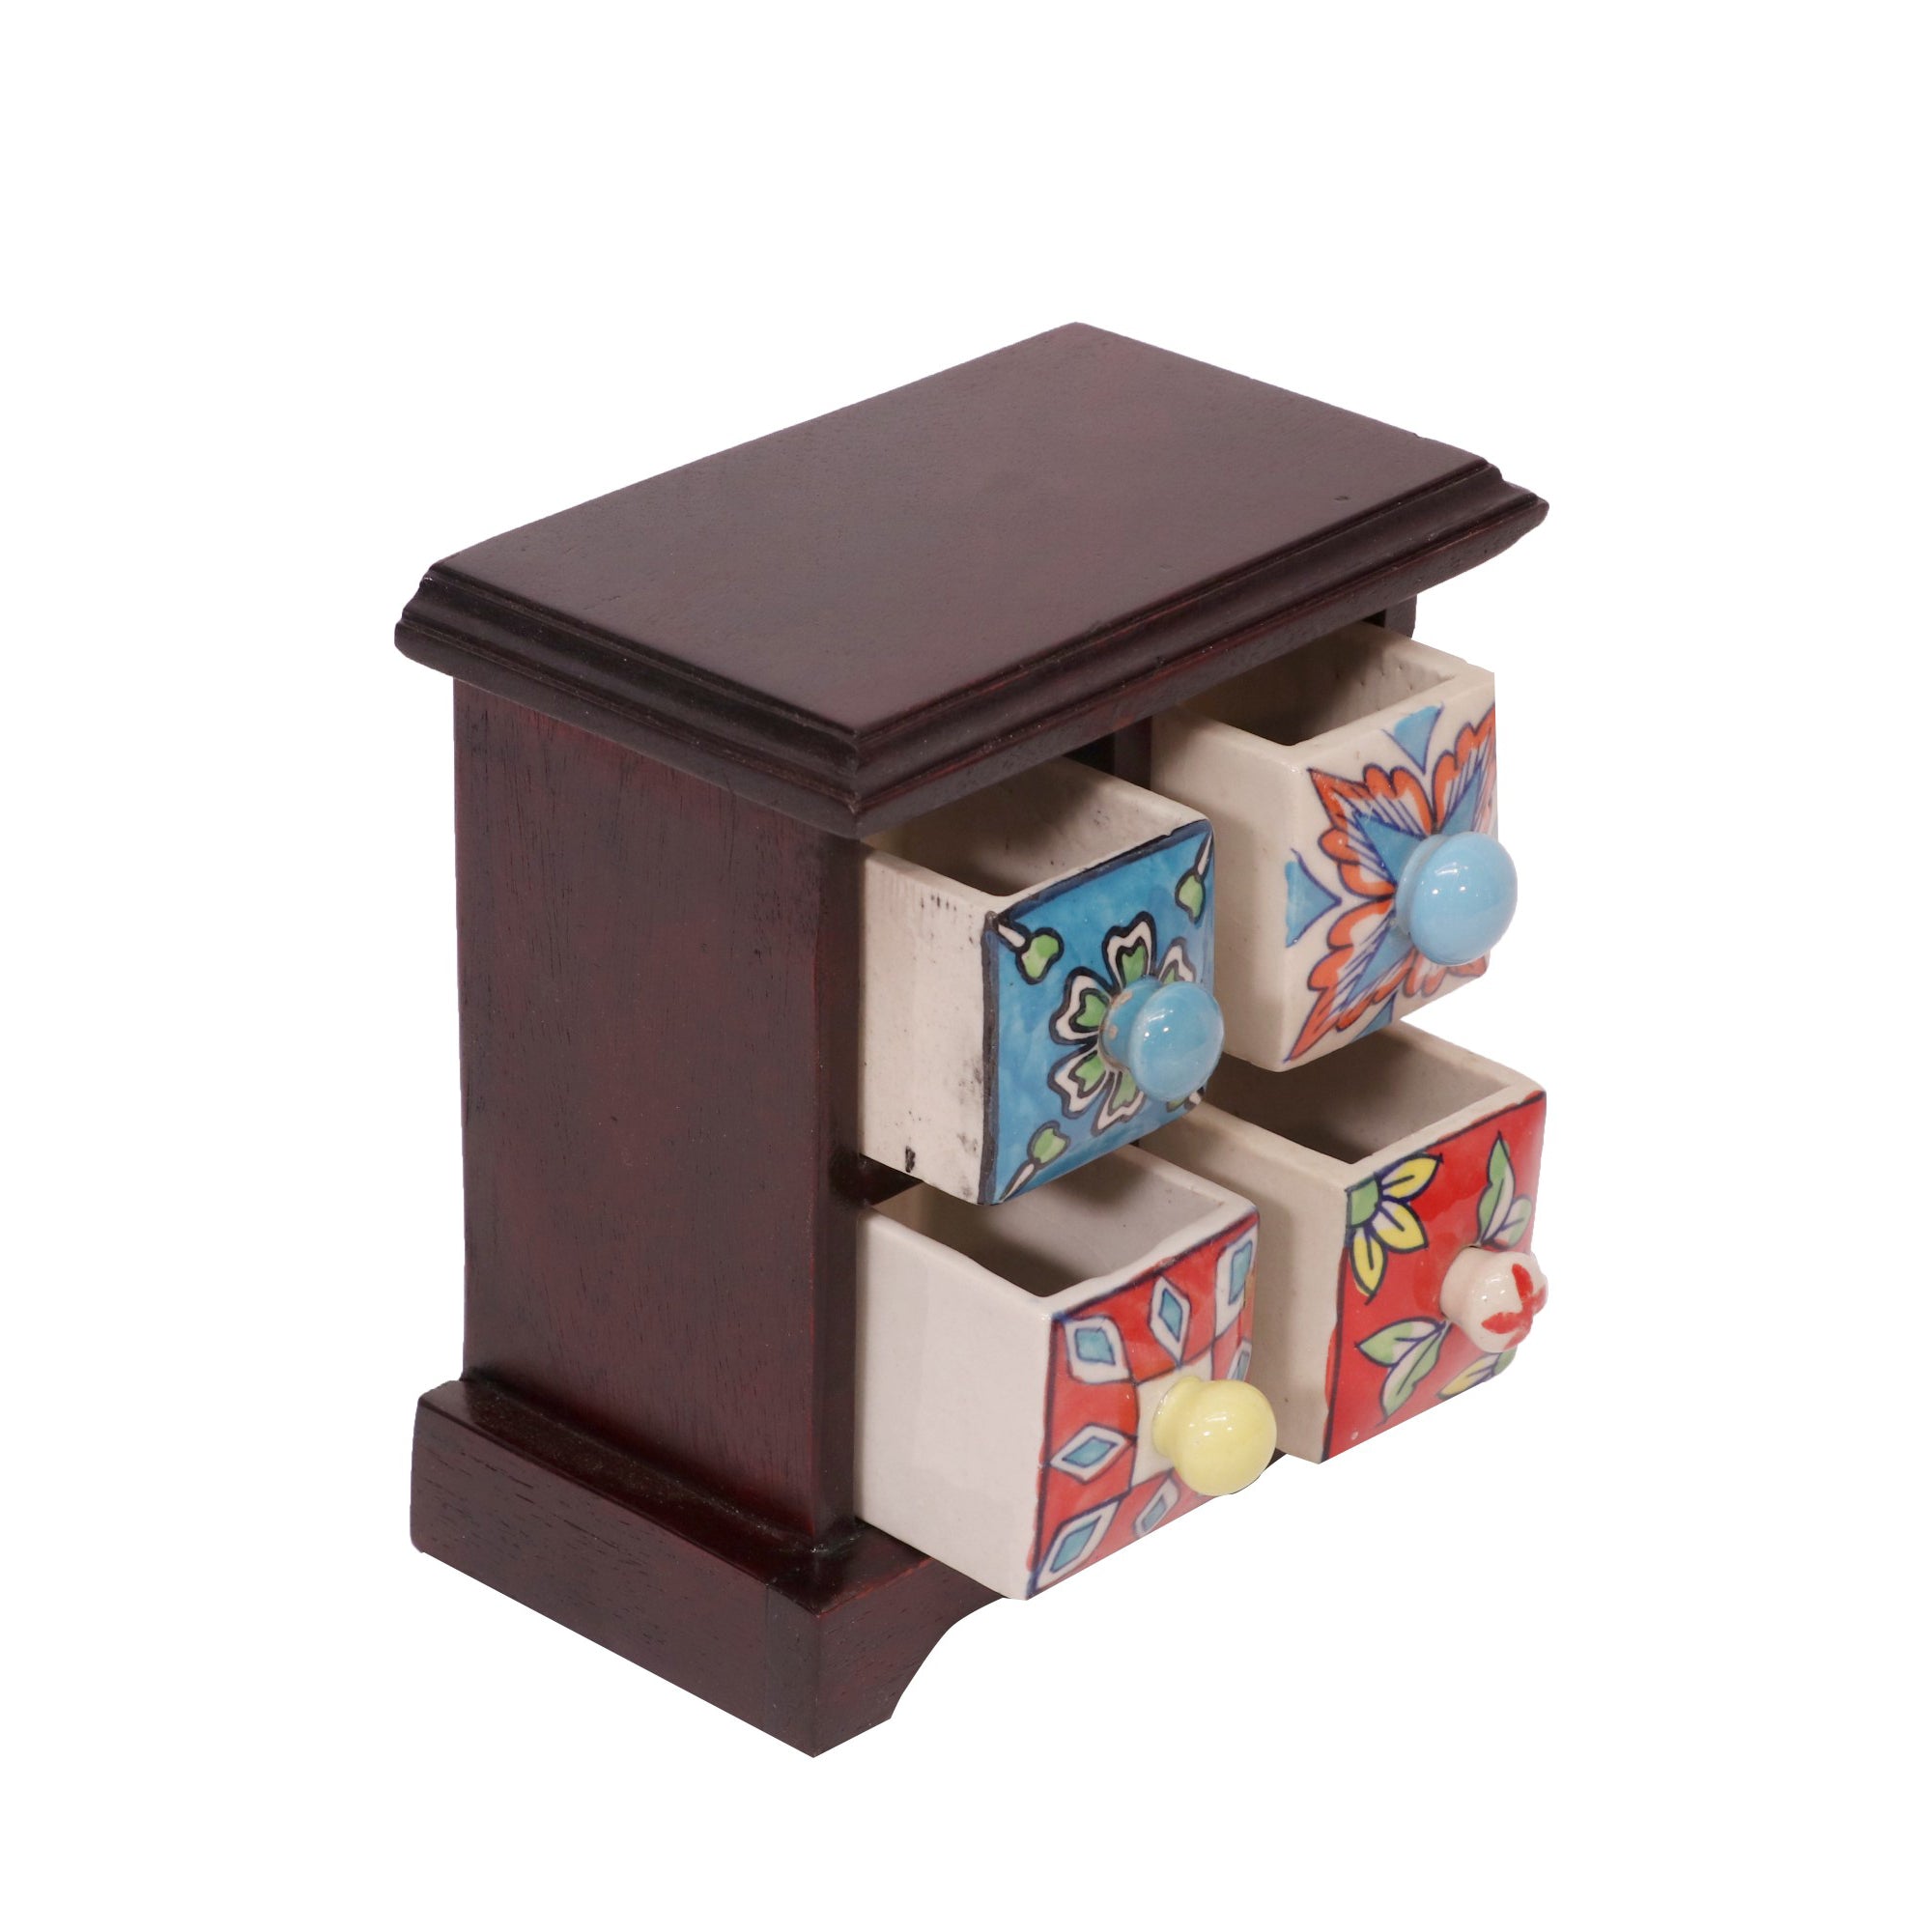 Miniature ceramic Bureau (Mahogany Color) Desk Organizer